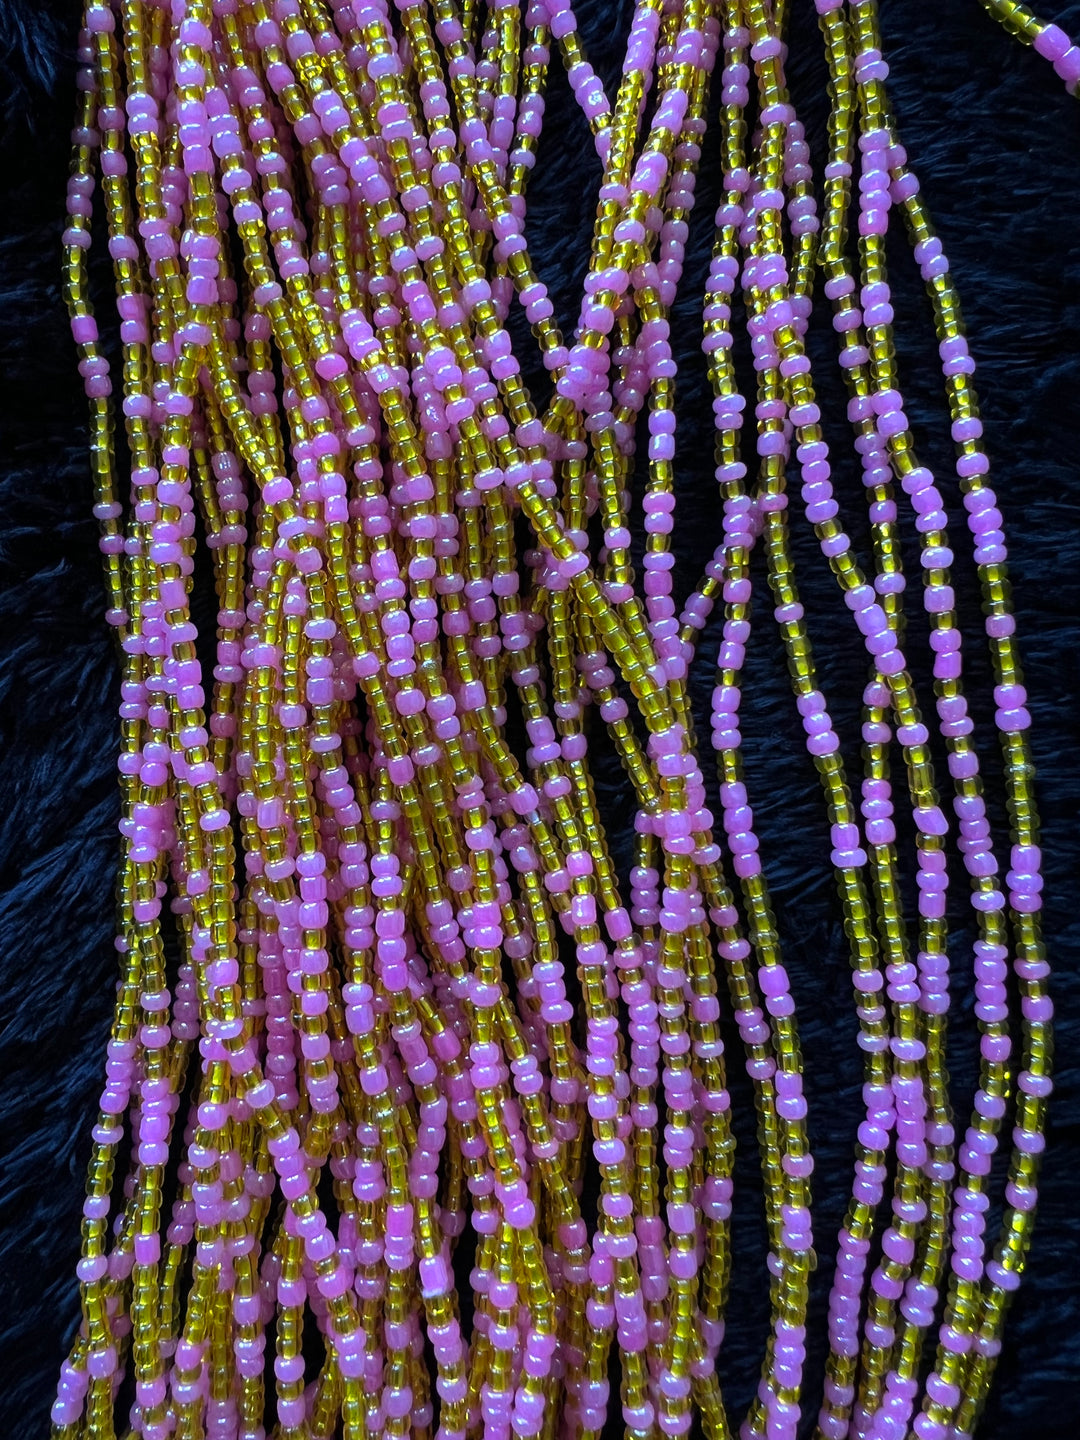 Handmade waist beads from the motherland.